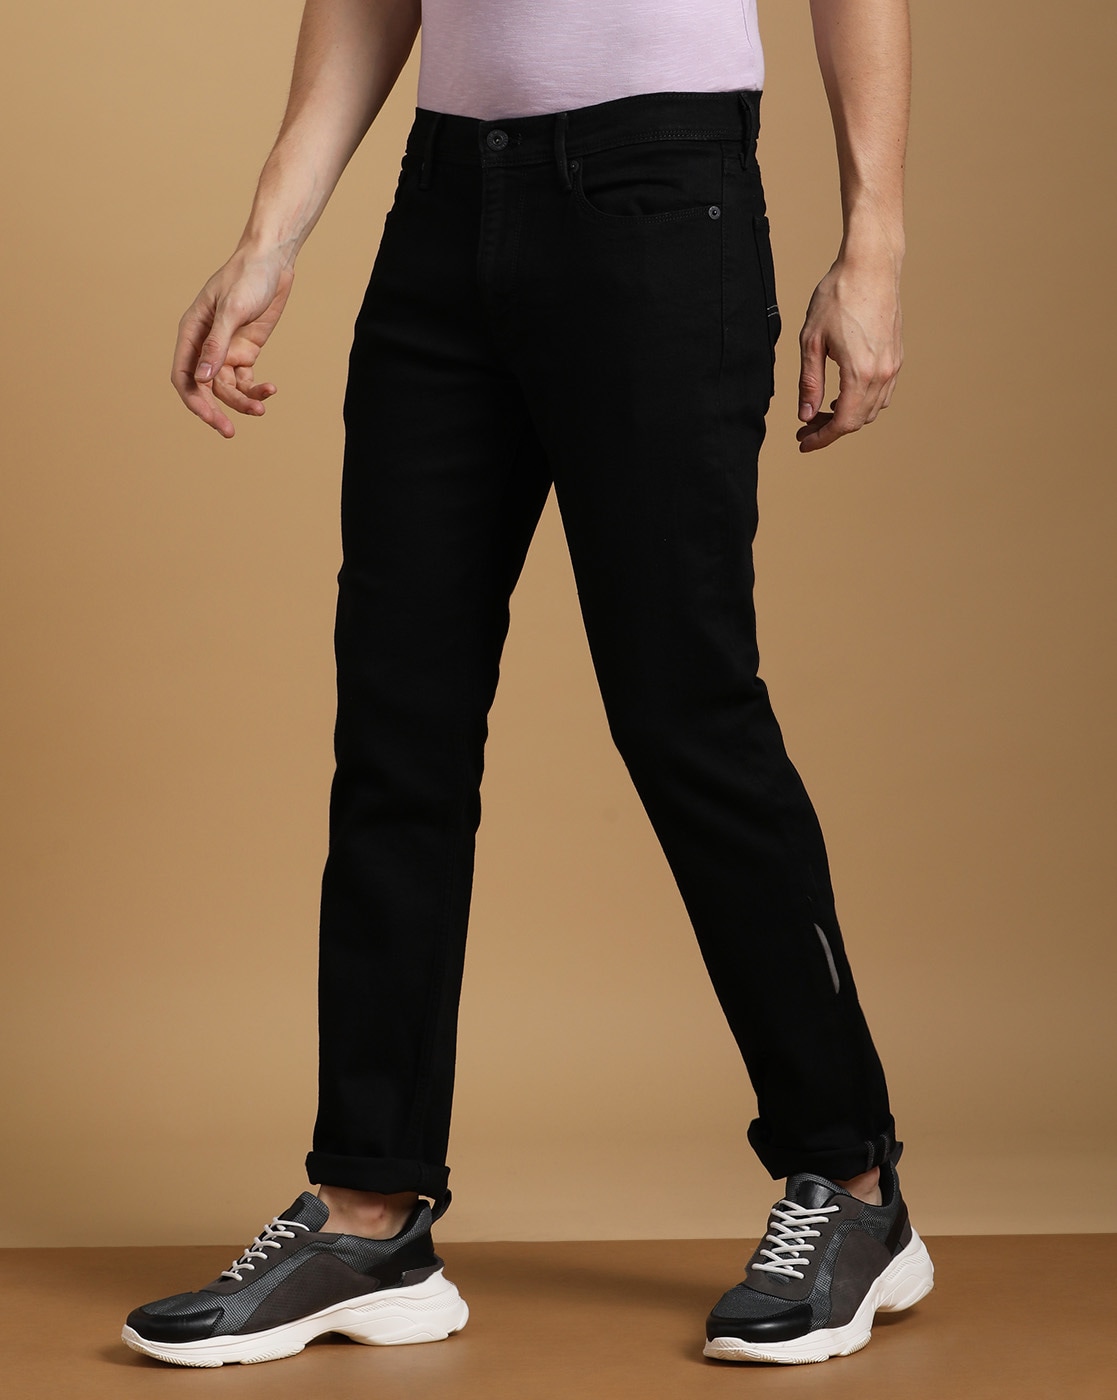 Men's Black Jeans | Men's Black Denim Jeans | Next